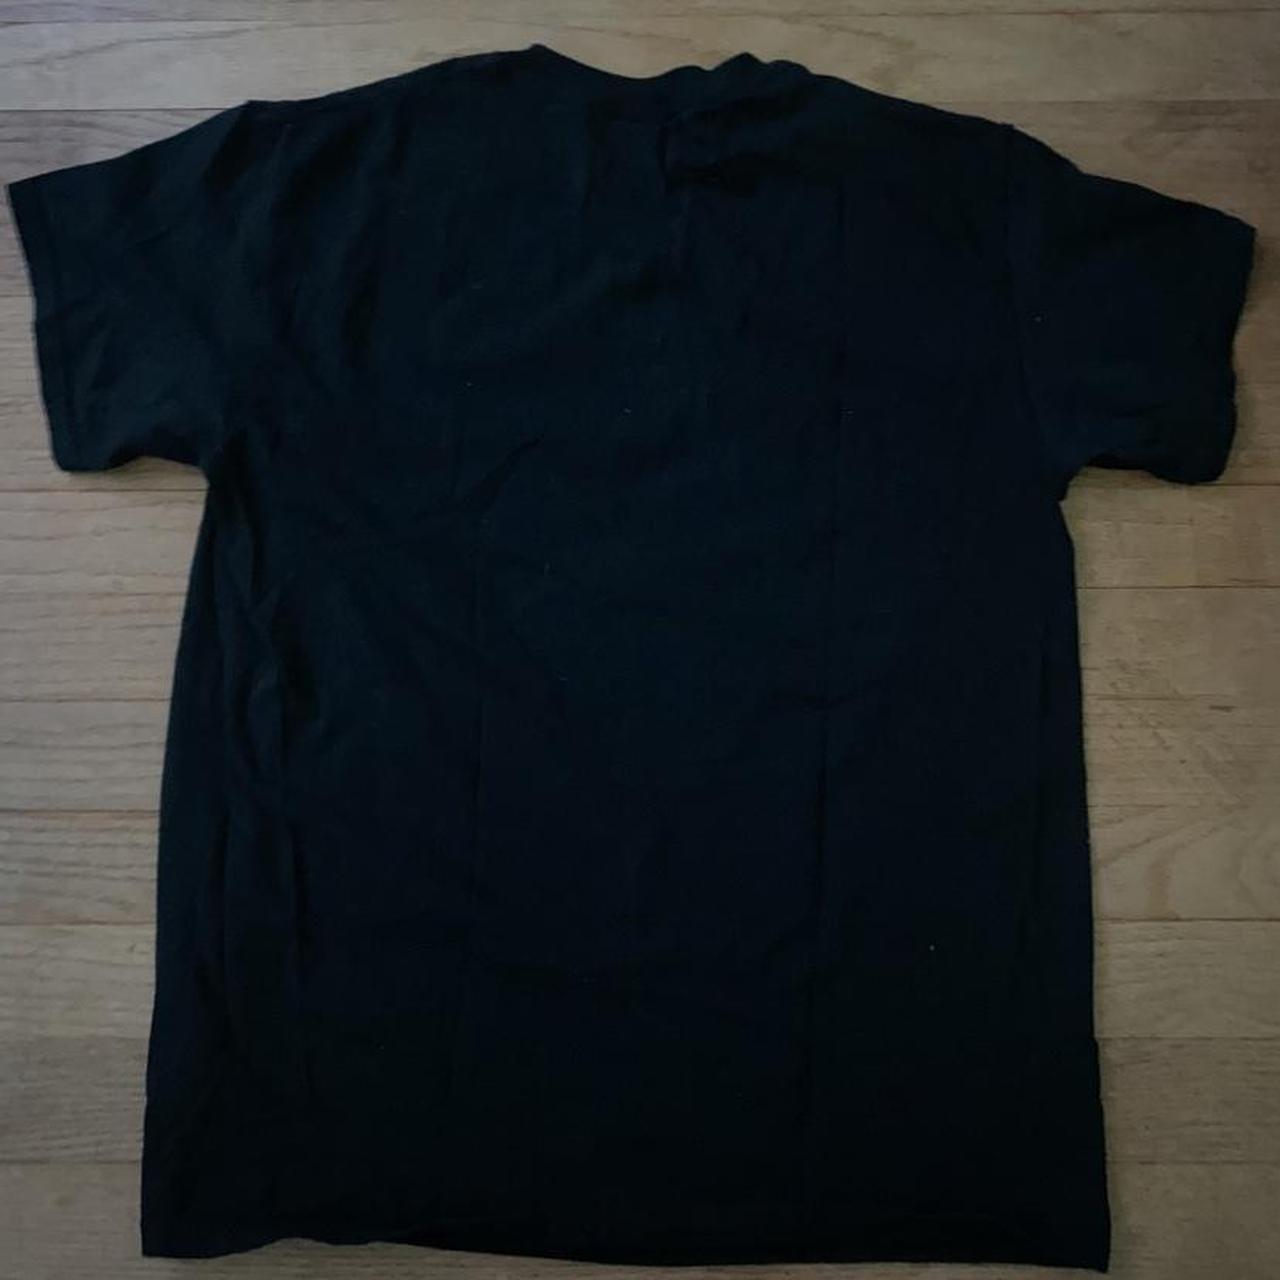 Gildan Men's Black and Green T-shirt | Depop